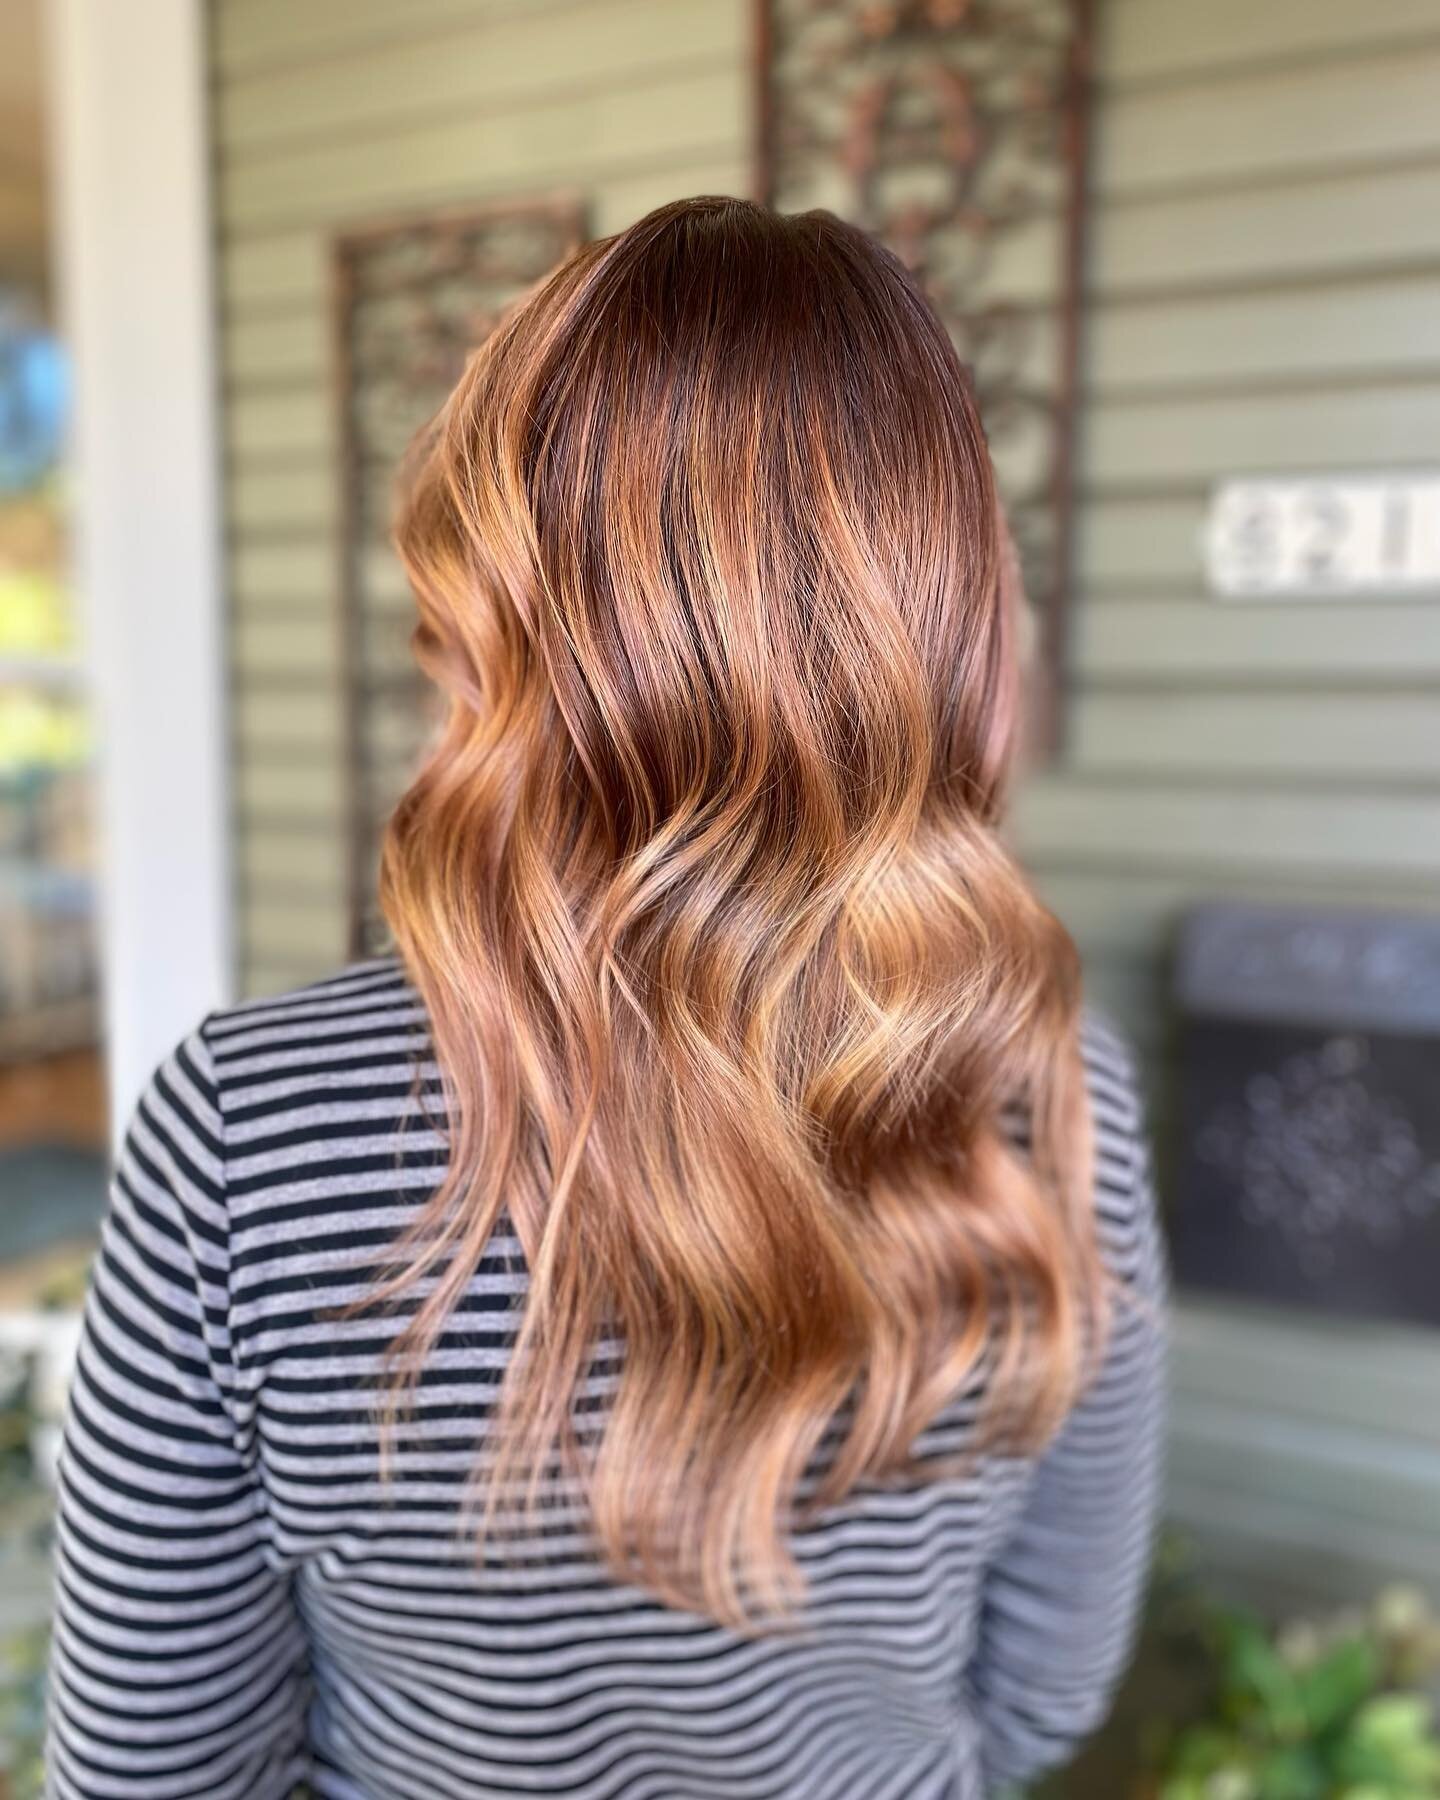 Pretty balyage for our stylist @heatherweddlehair by our stylist @hallienapolitanohair  girls fun hair day! 💛💛 #blondebysummer